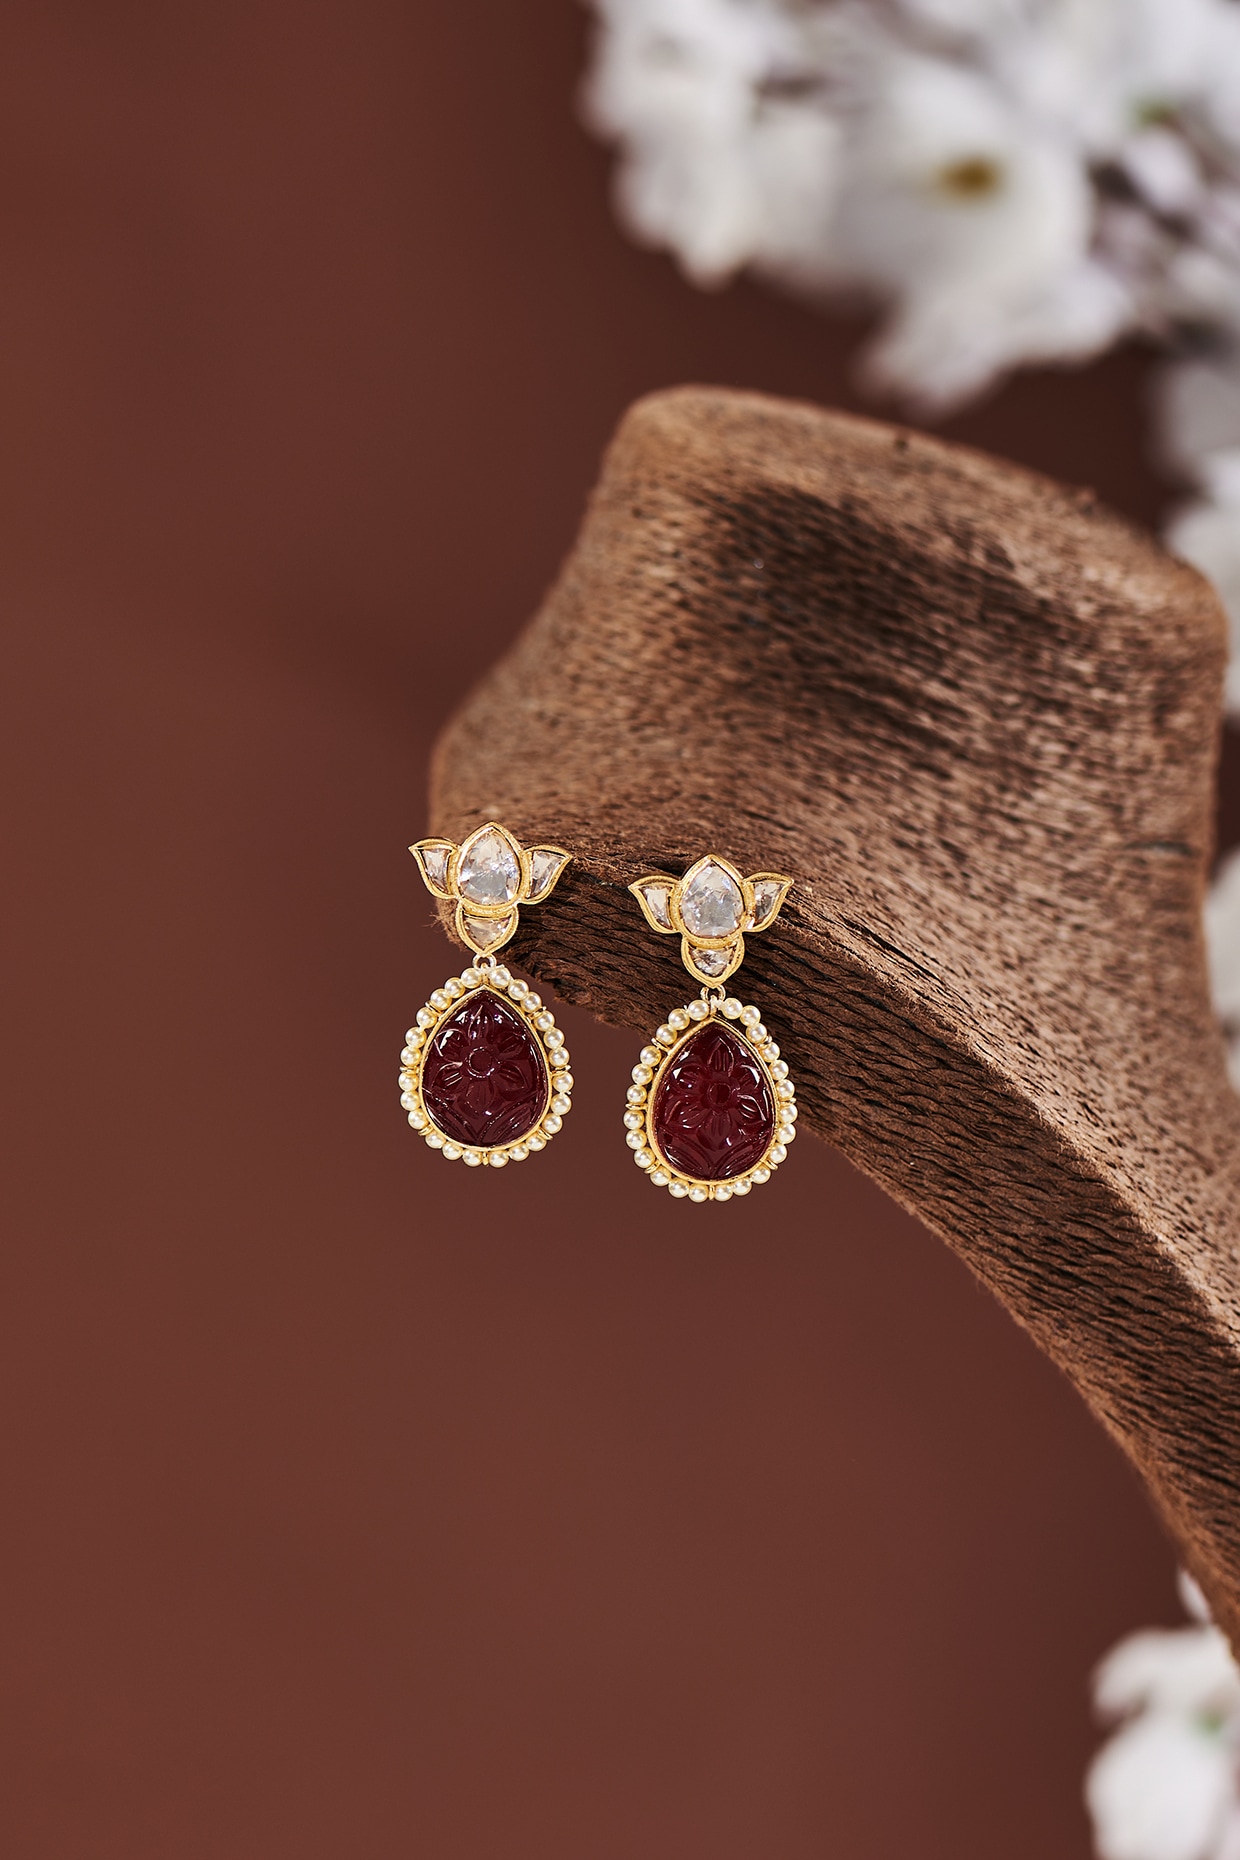 Buy Oversized Diamond Jhumka, Fancy Diamond Earrings Online: Attrangi